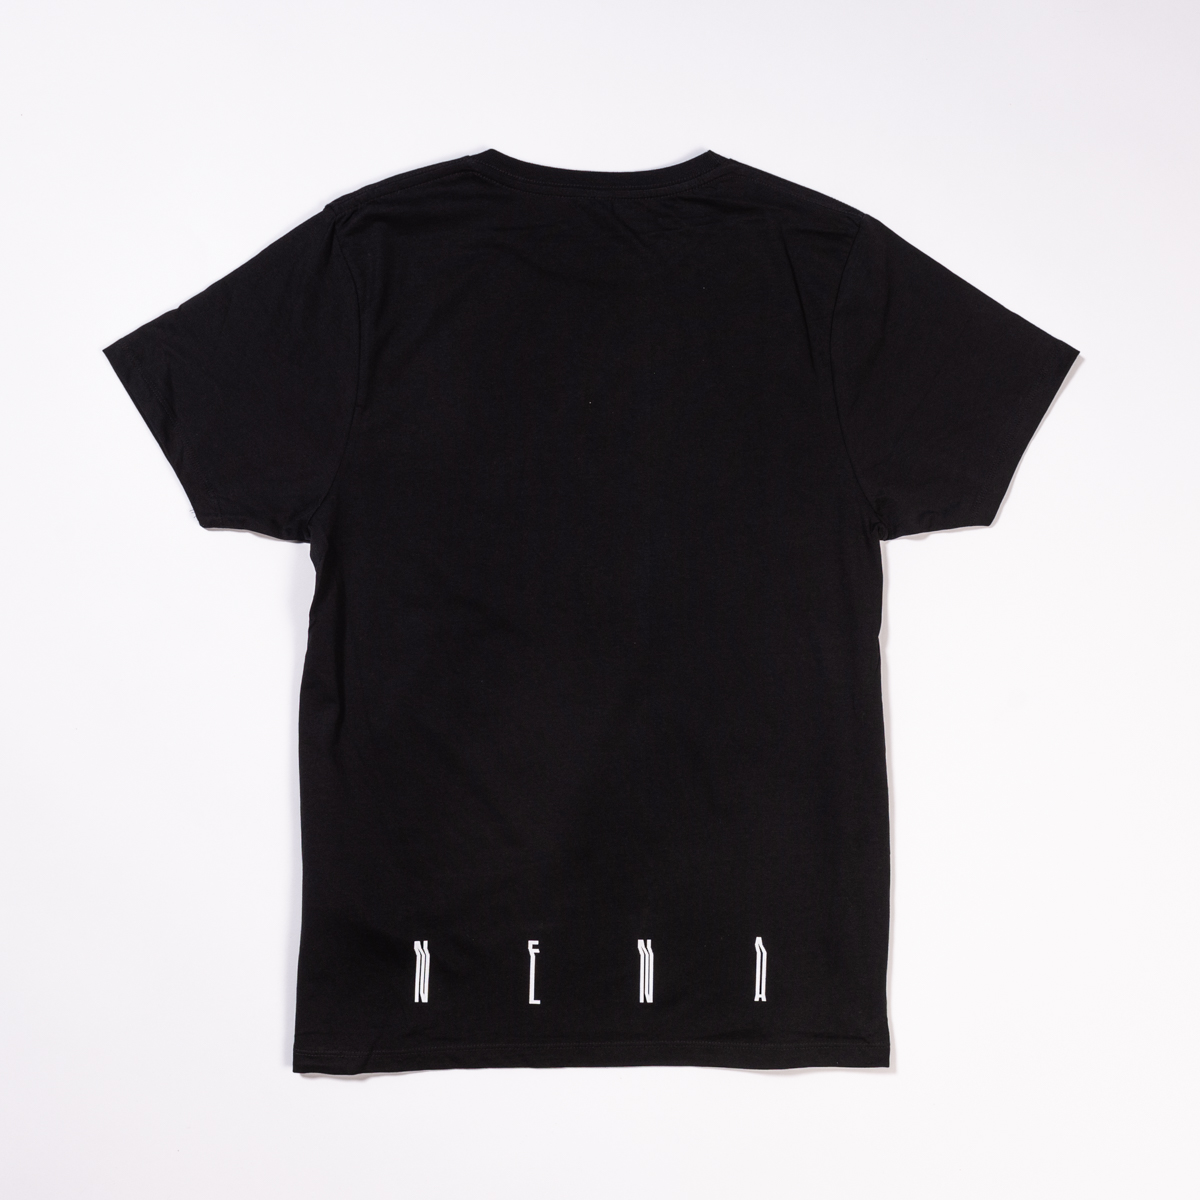 NENA T-Shirt LICHT / NENA